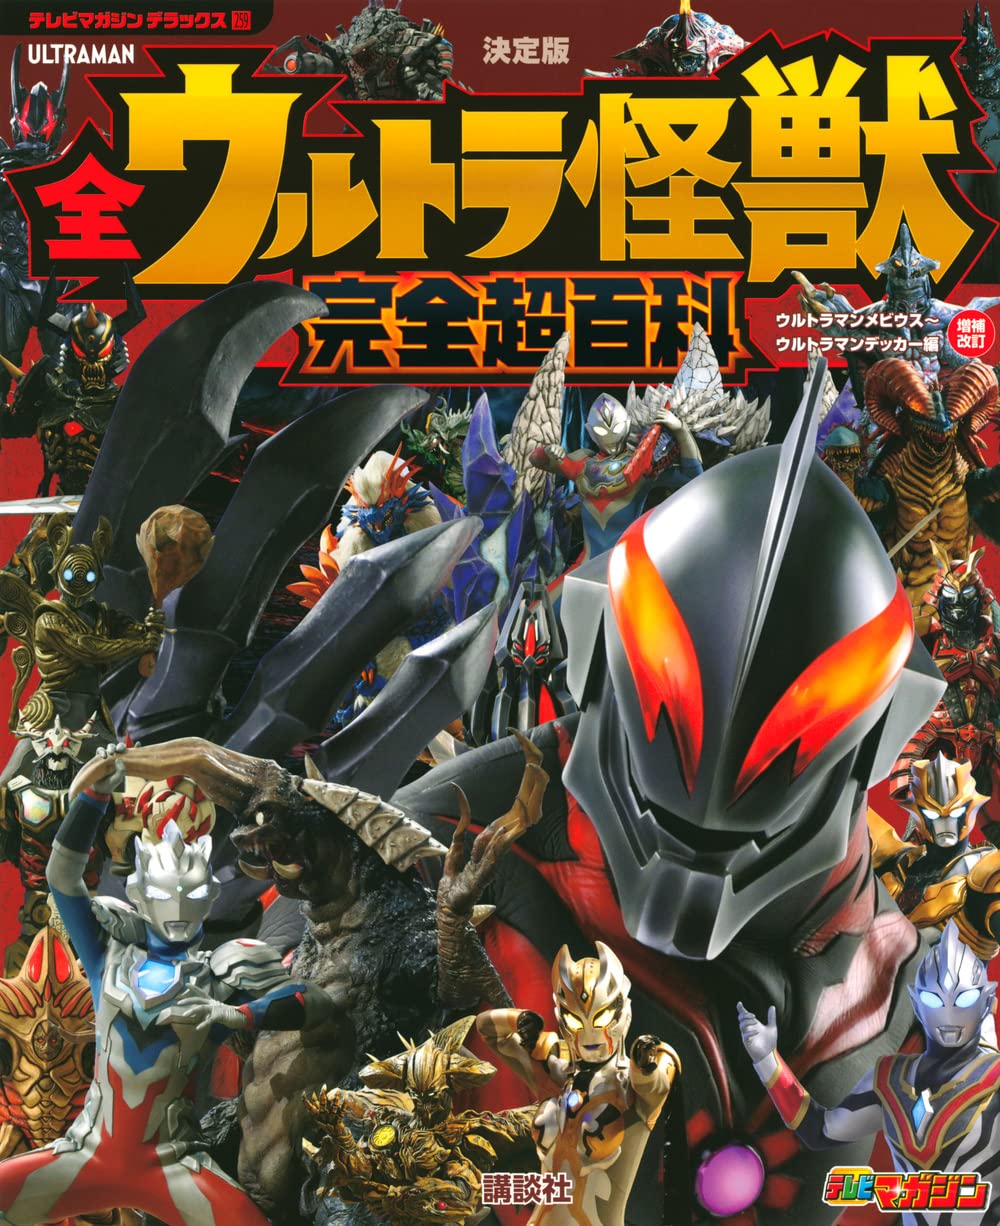 Ultra Zone (Ultraman) Official Guide Book